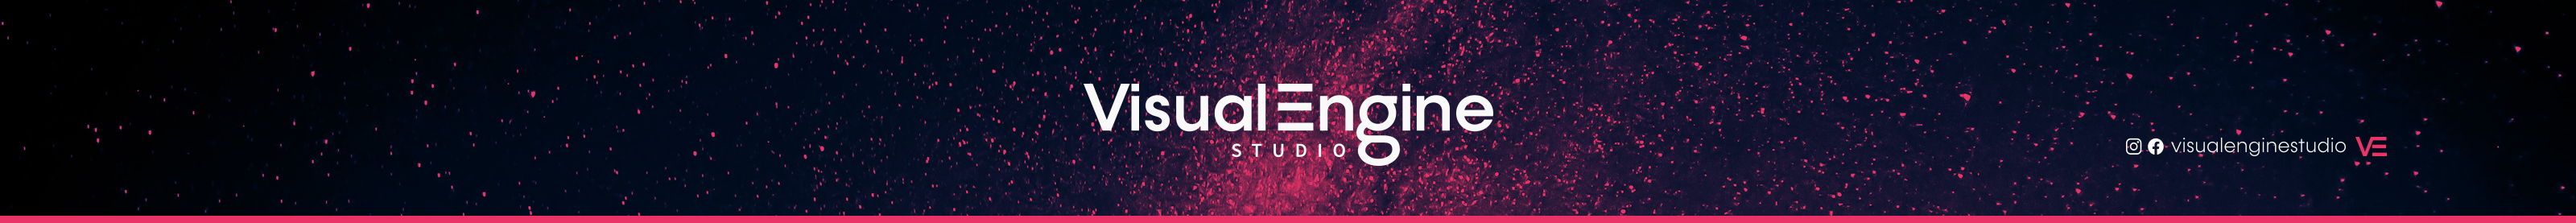 Visual Engine Studio profil başlığı